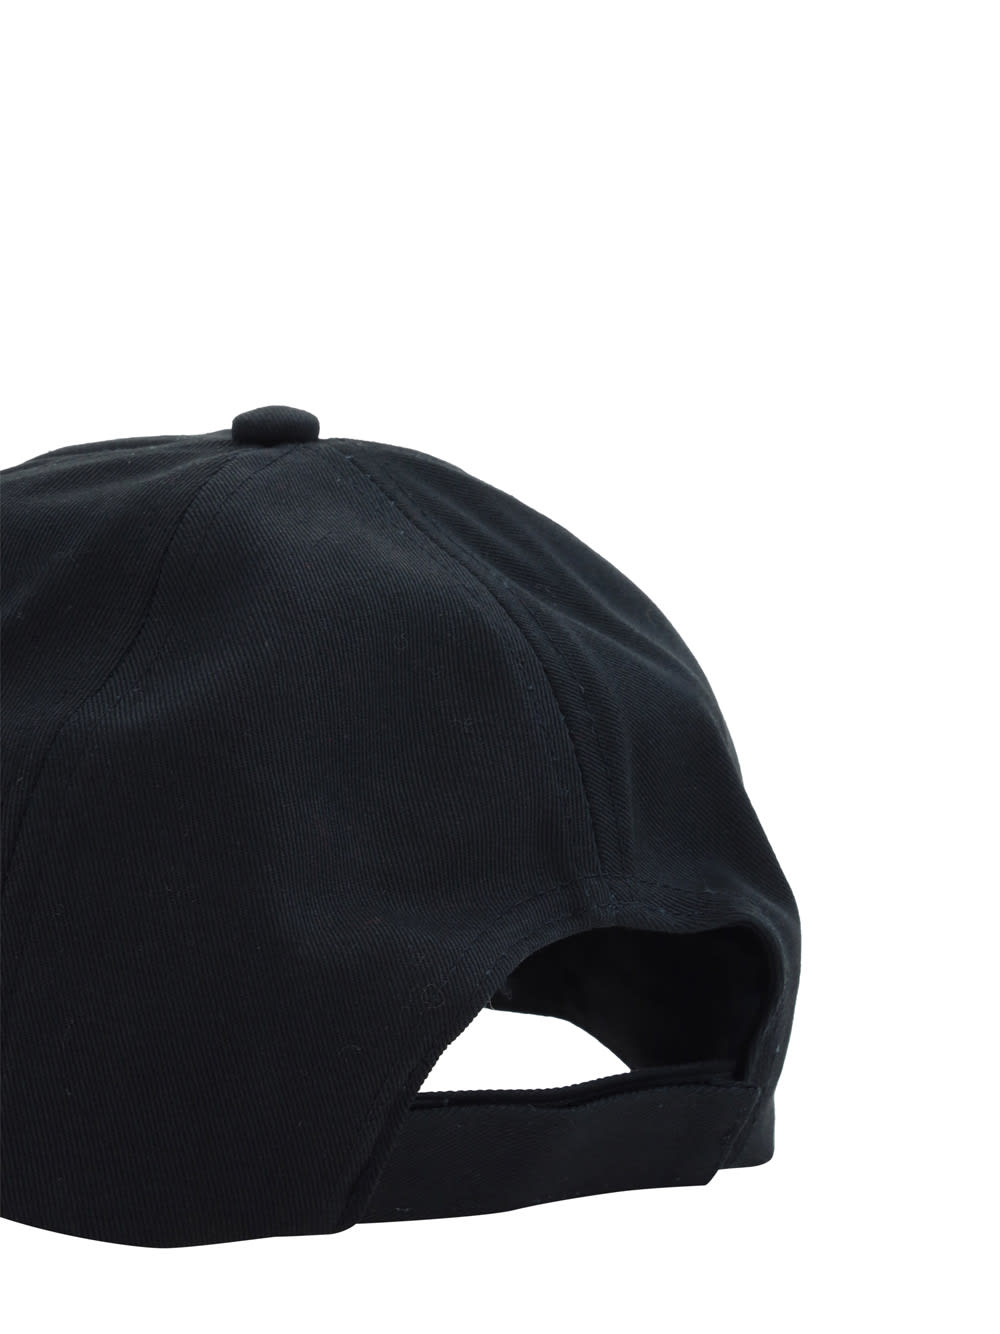 Shop Ganni Baseball Hat In Black